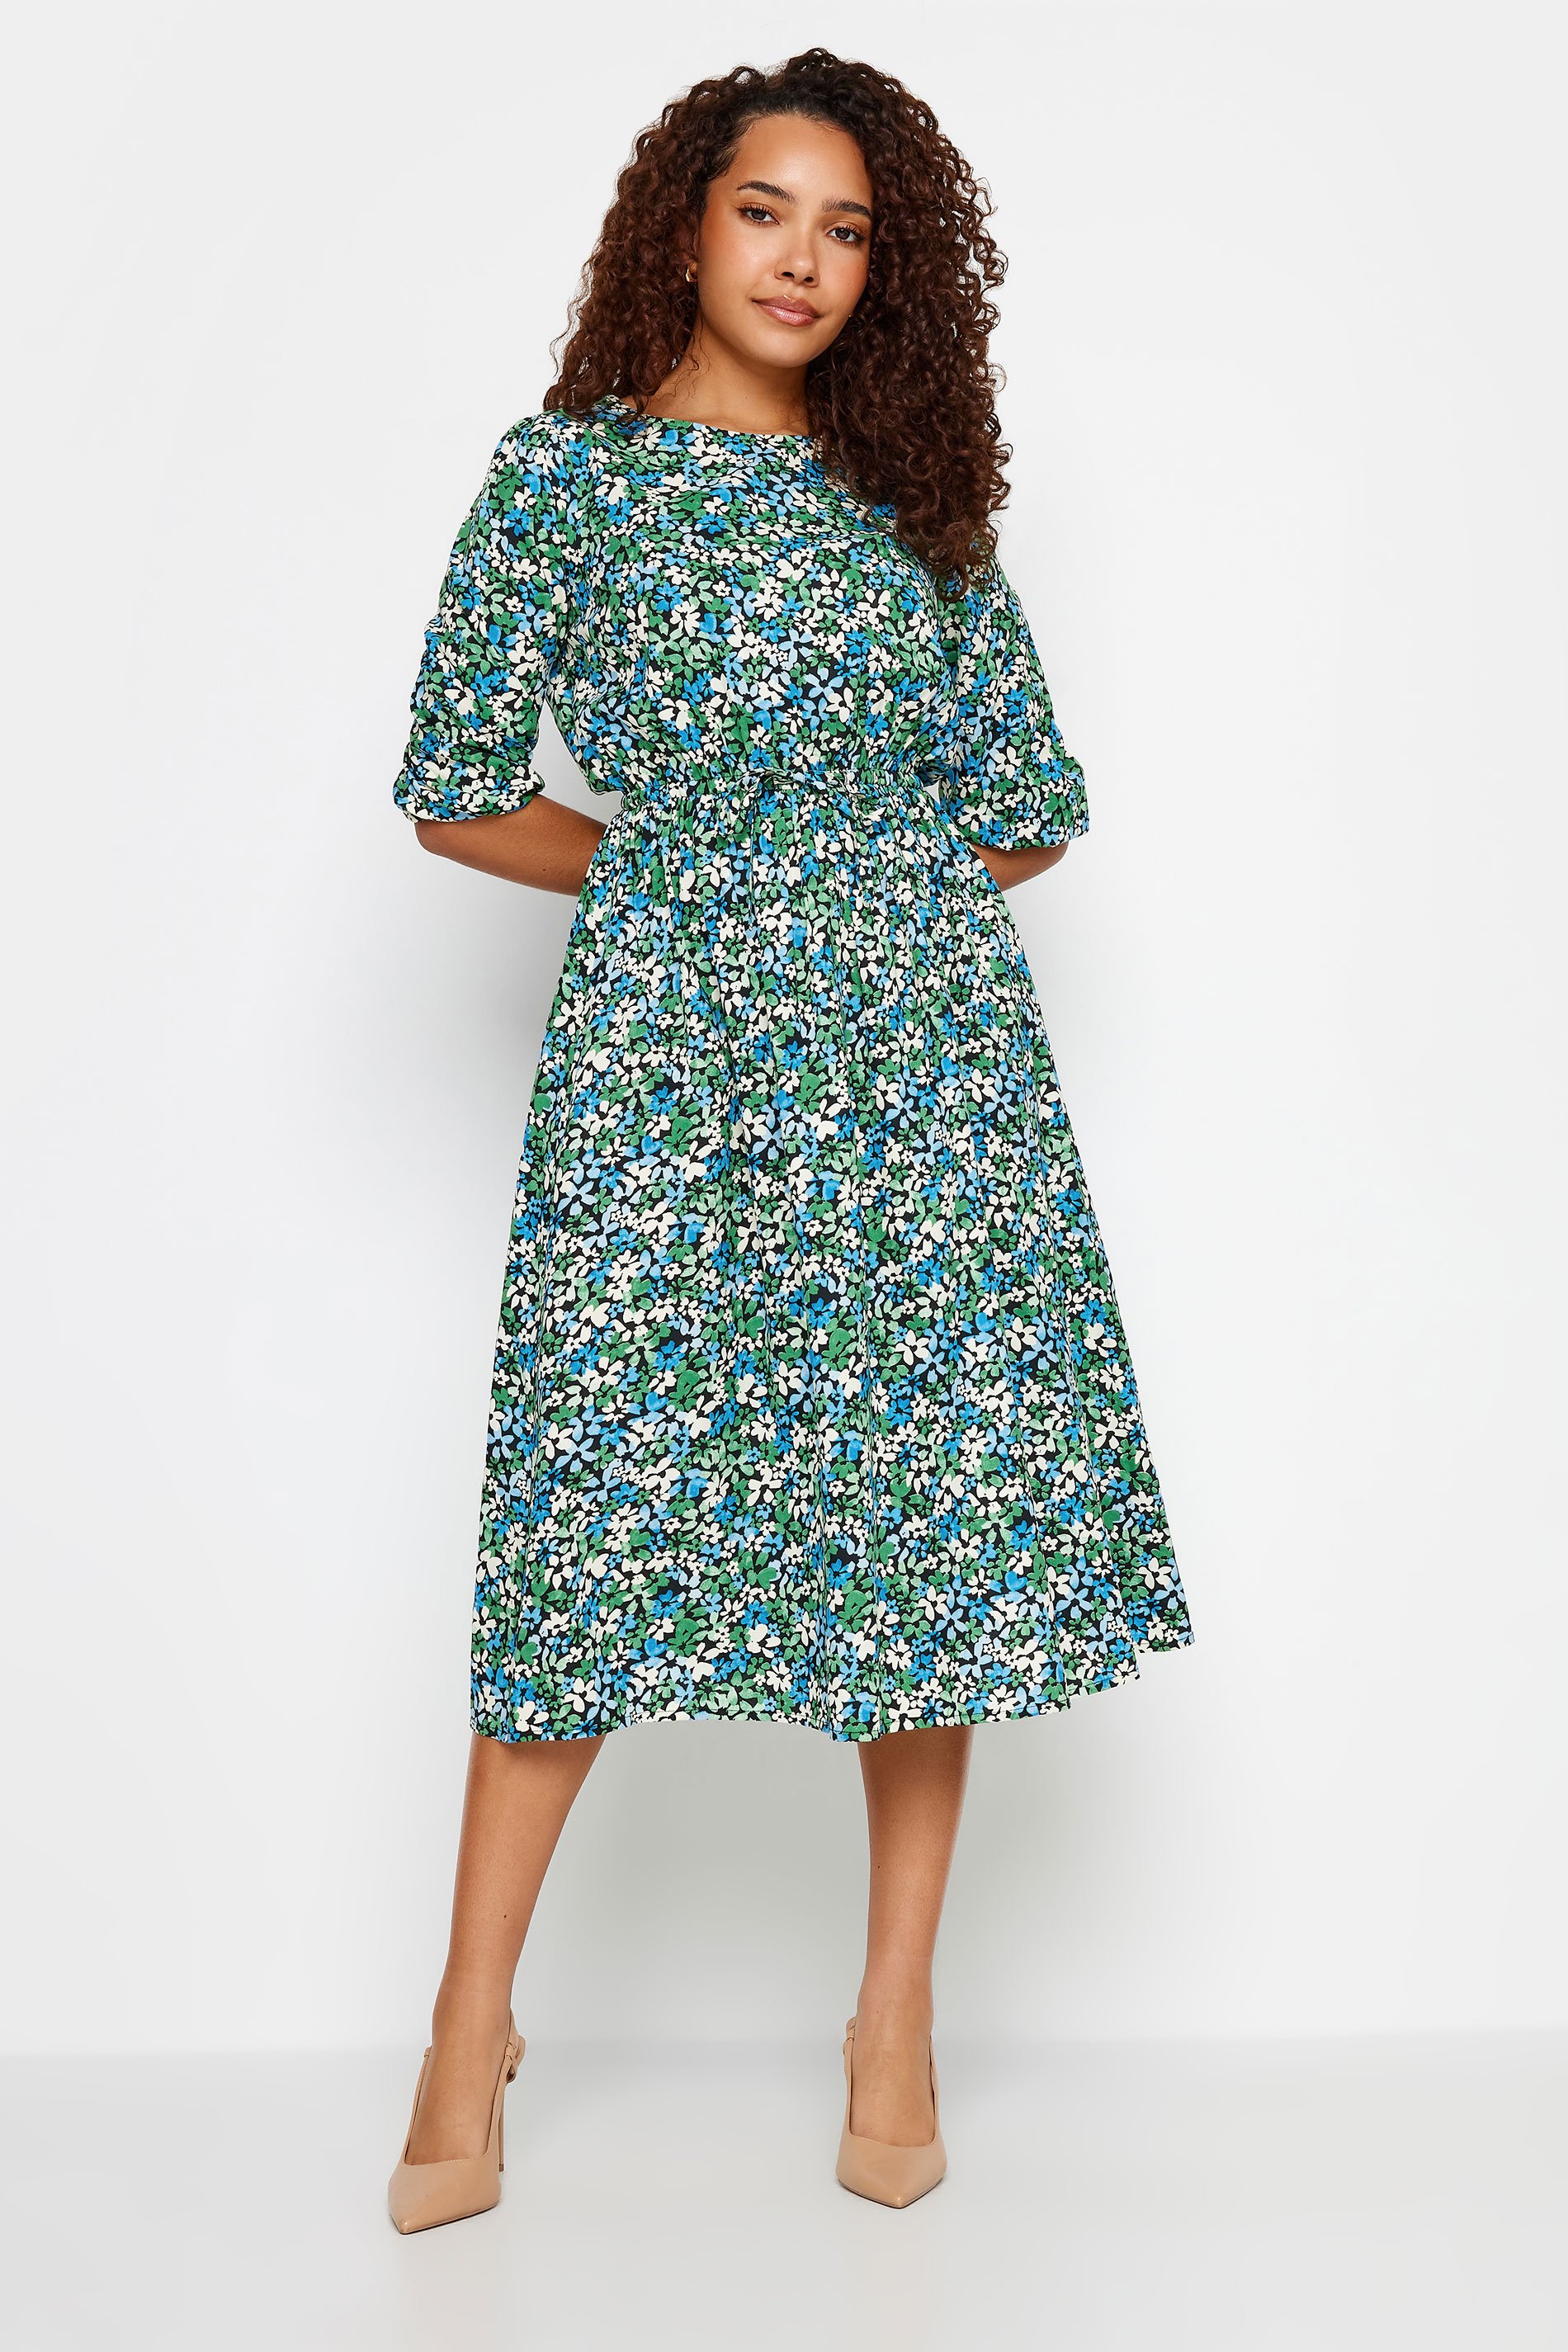 M&Co Green Floral Shirred Waist Long Sleeve Midi Dress | M&Co 2